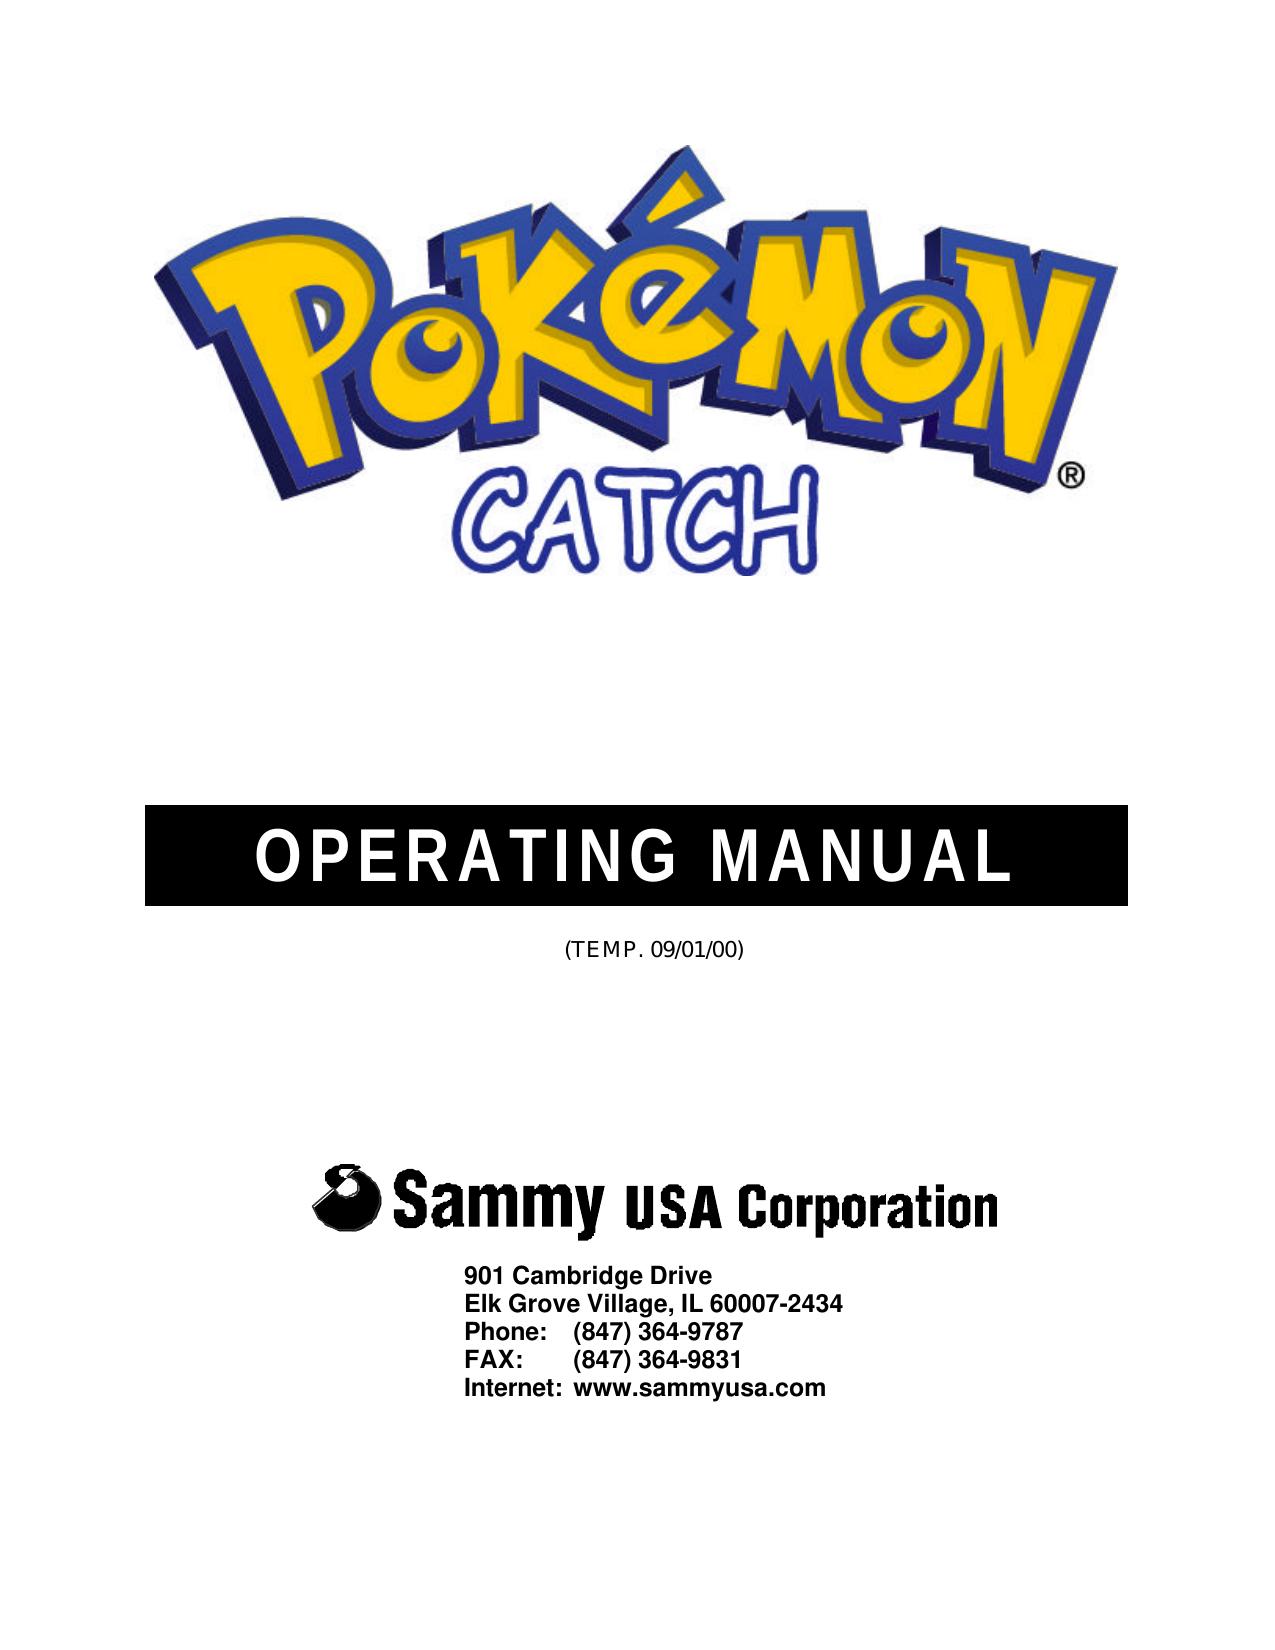 083100 Manual Pokemon Catch.pub